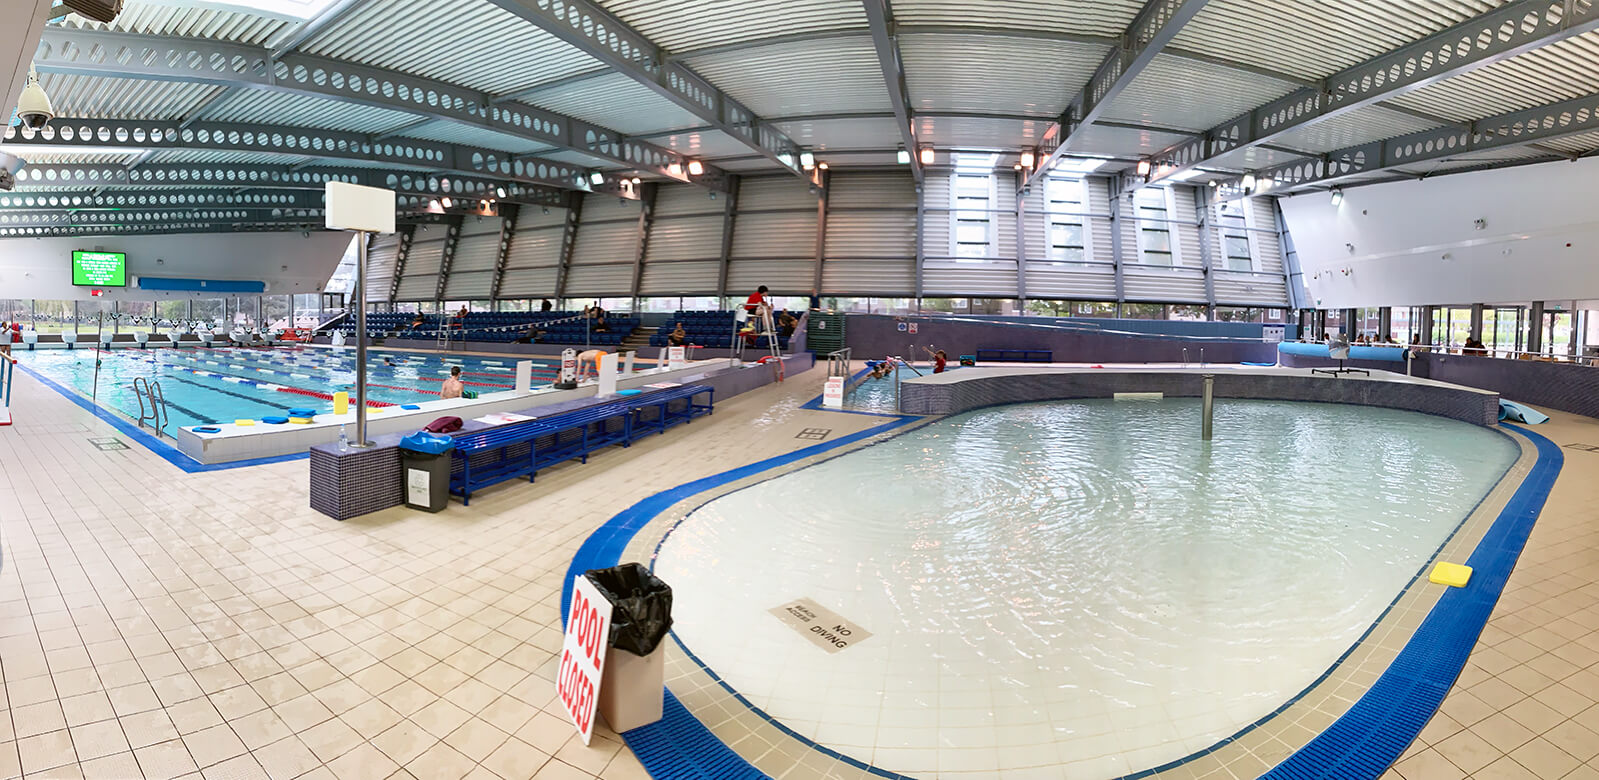 Leys Pool & Leisure Centre